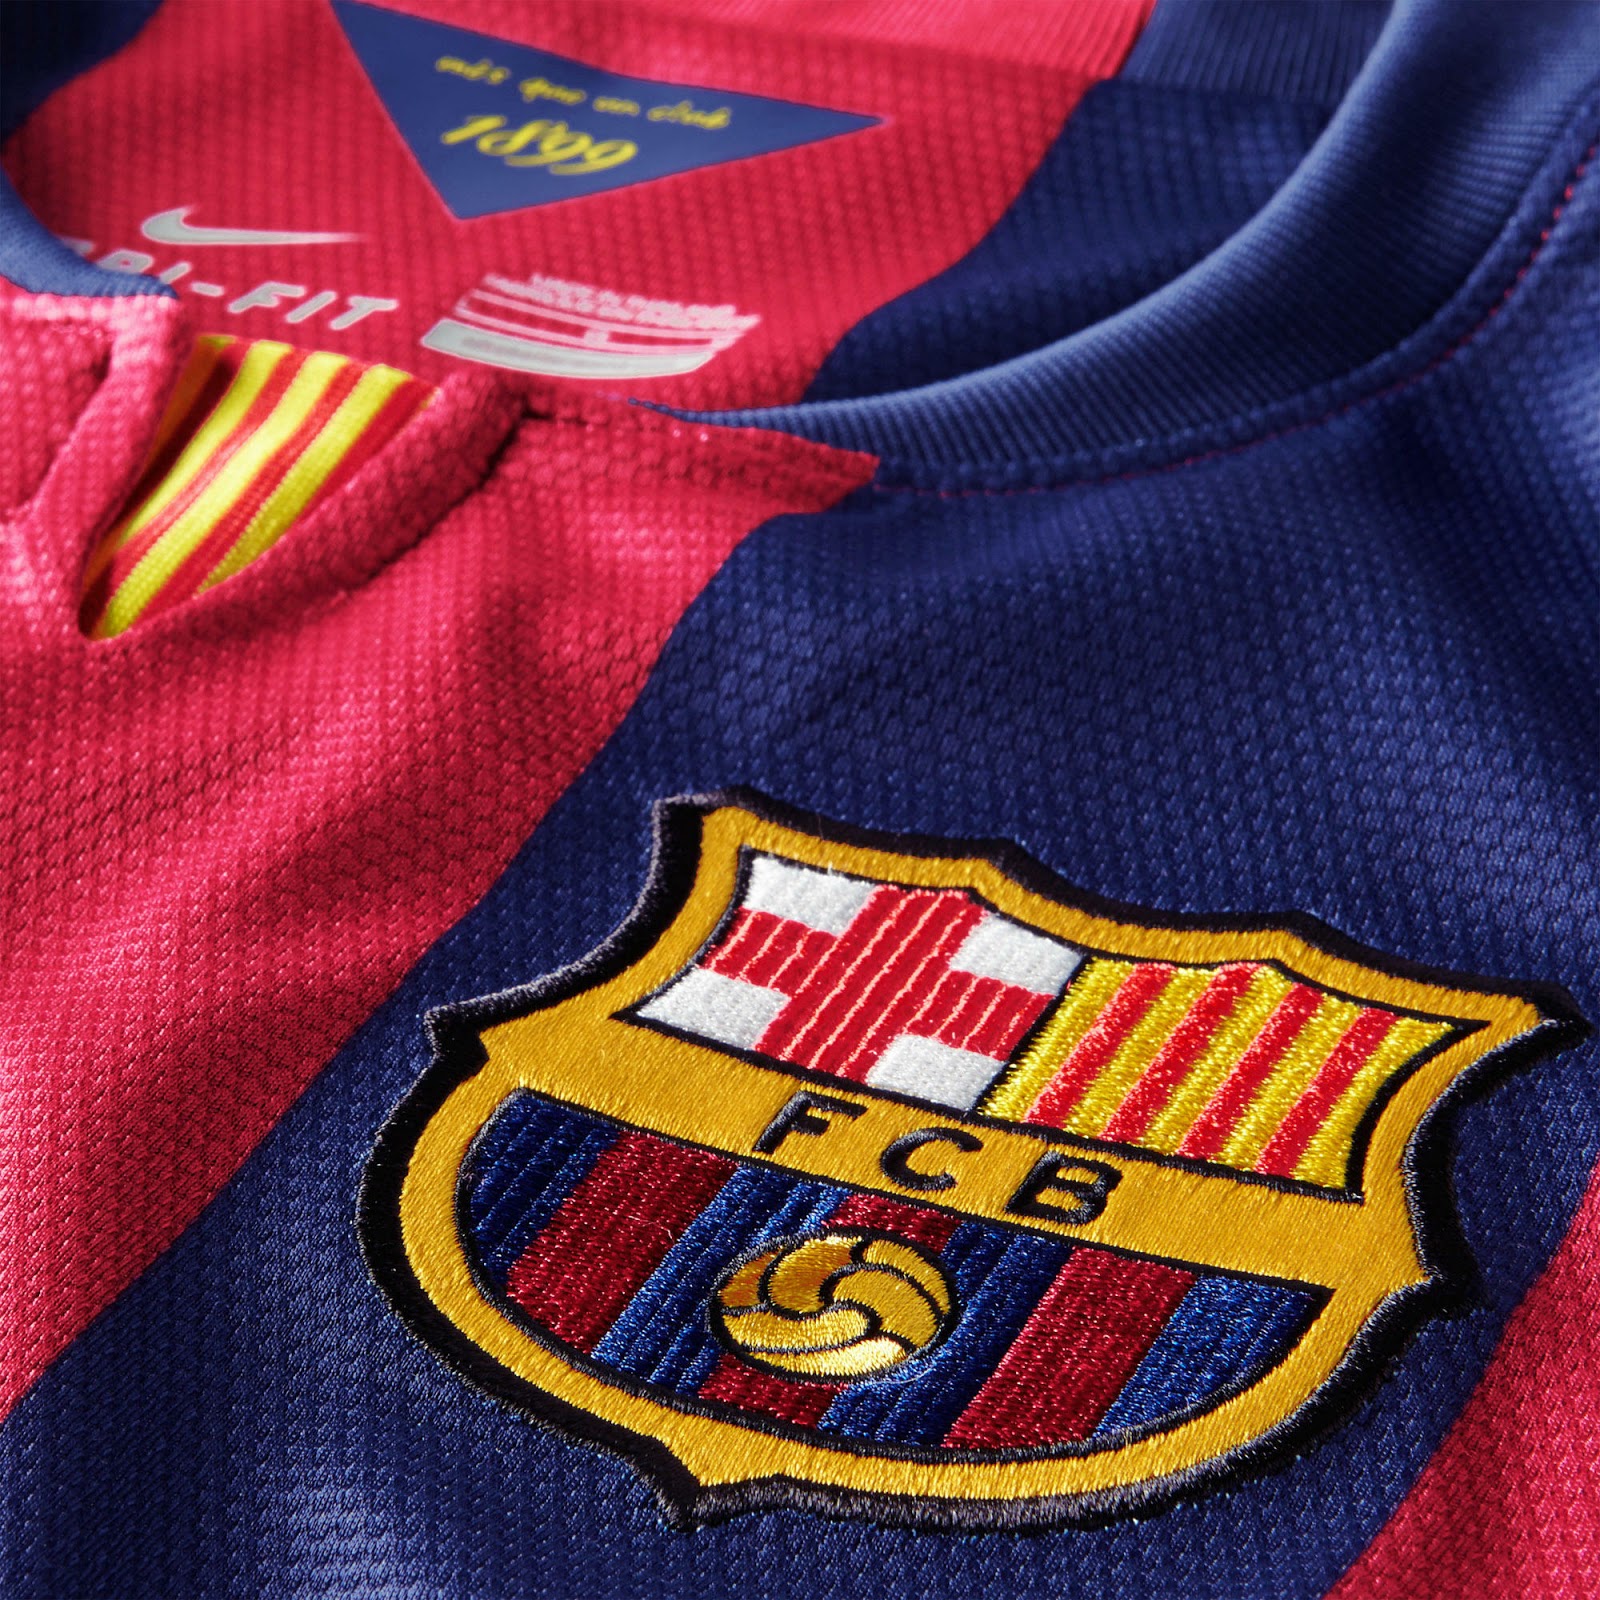 FC Barcelona 14 15 (2014 15) Home, Away and Third Kits   Footy    fc barcelona home kit 2014/15